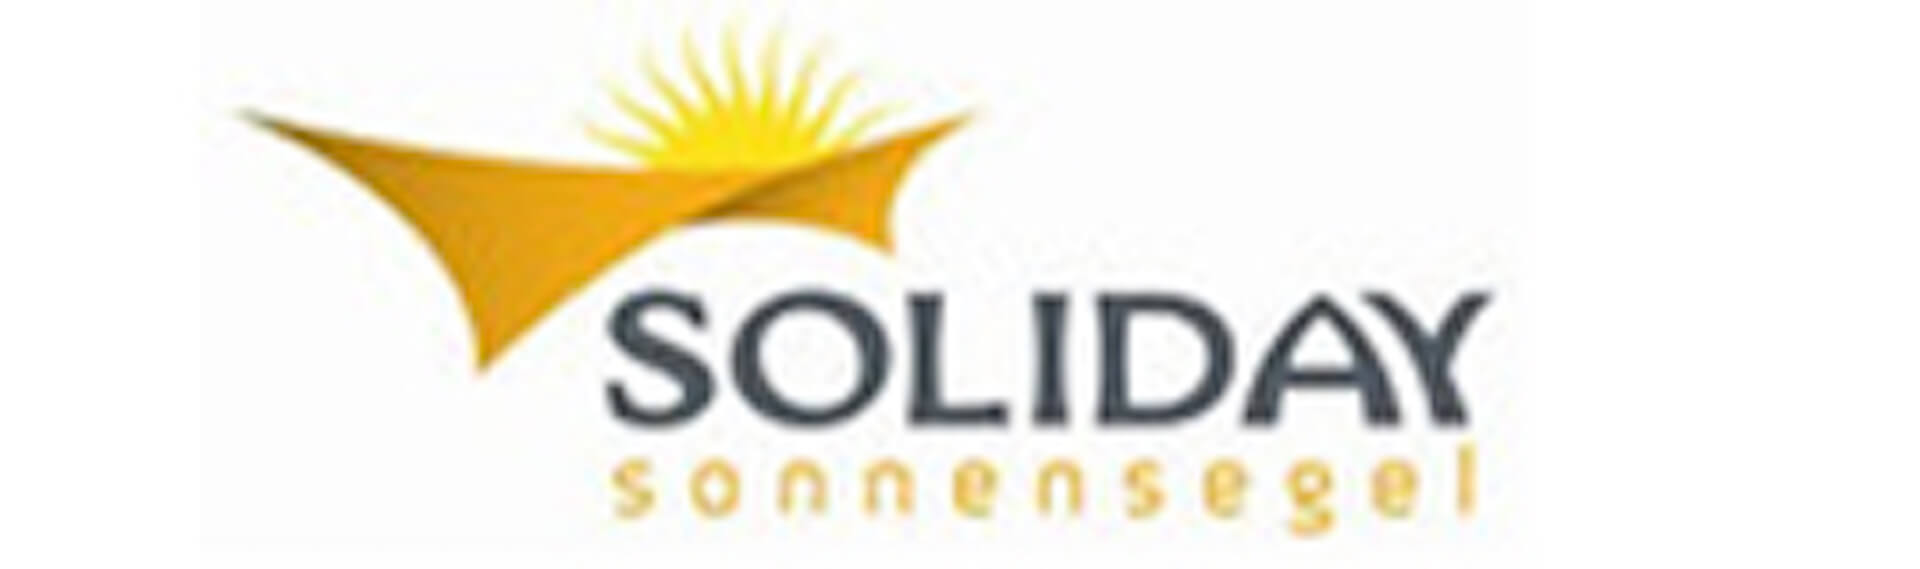 Soliday Sonnensegel Logo